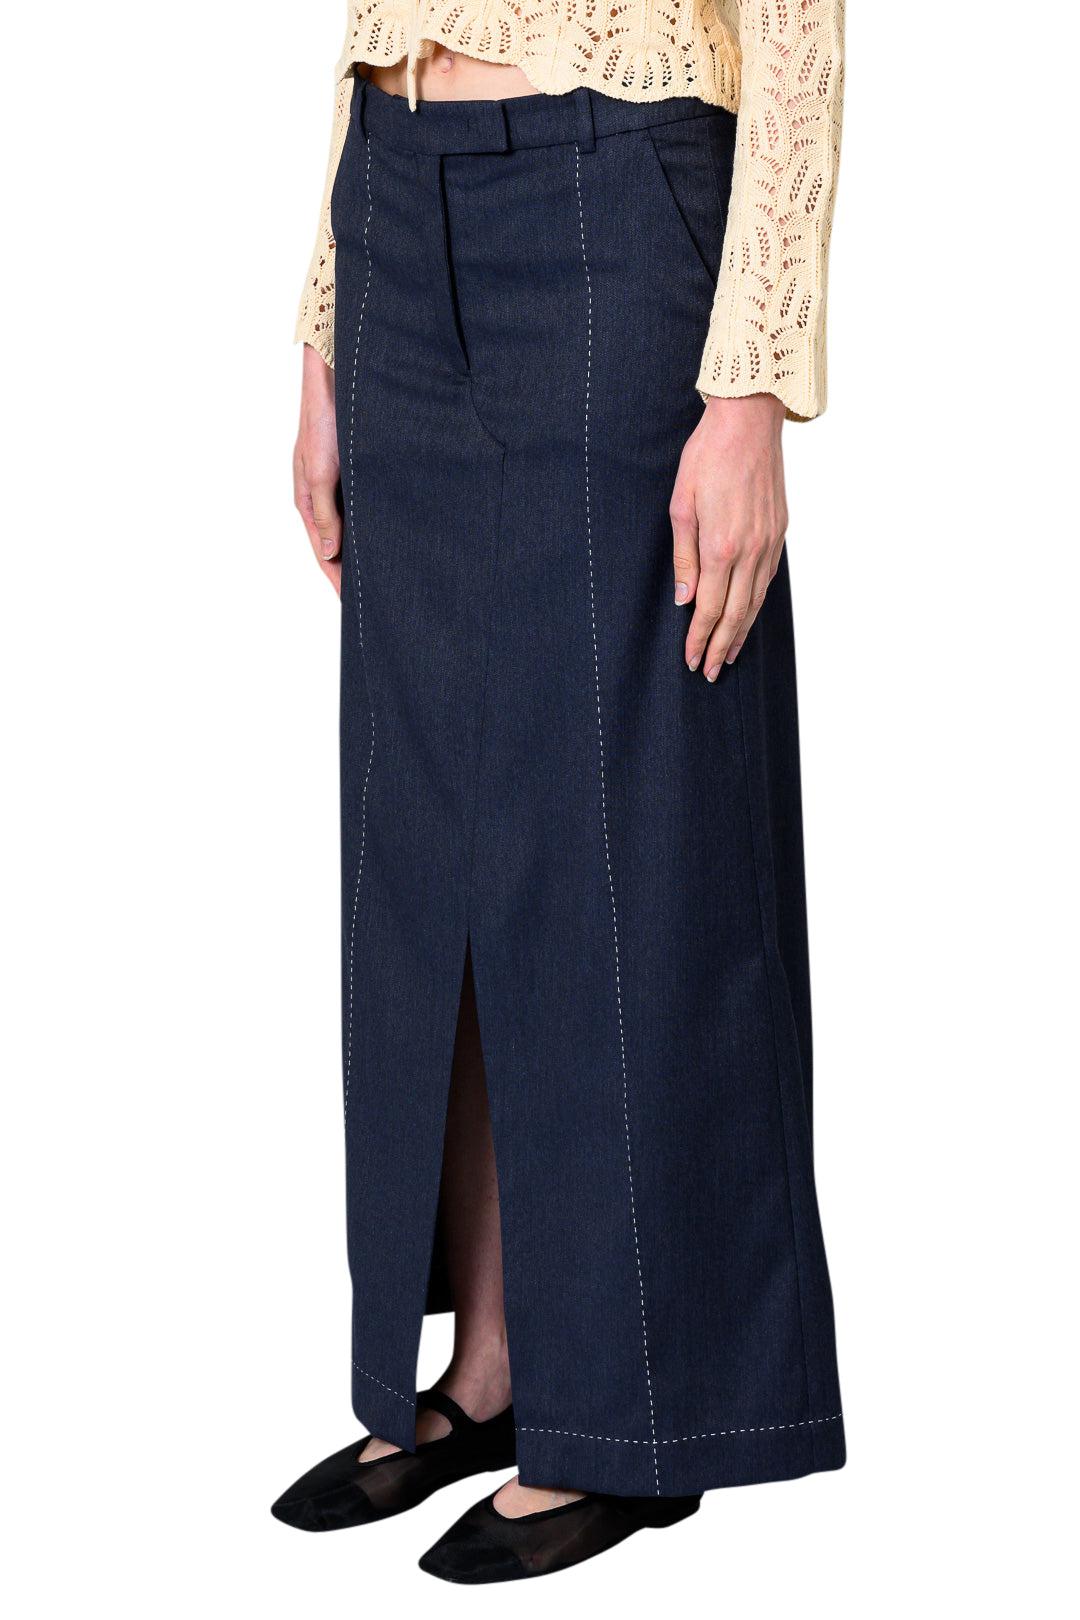 The Garment-Pluto Stitch Skirt-20246-dgallerystore